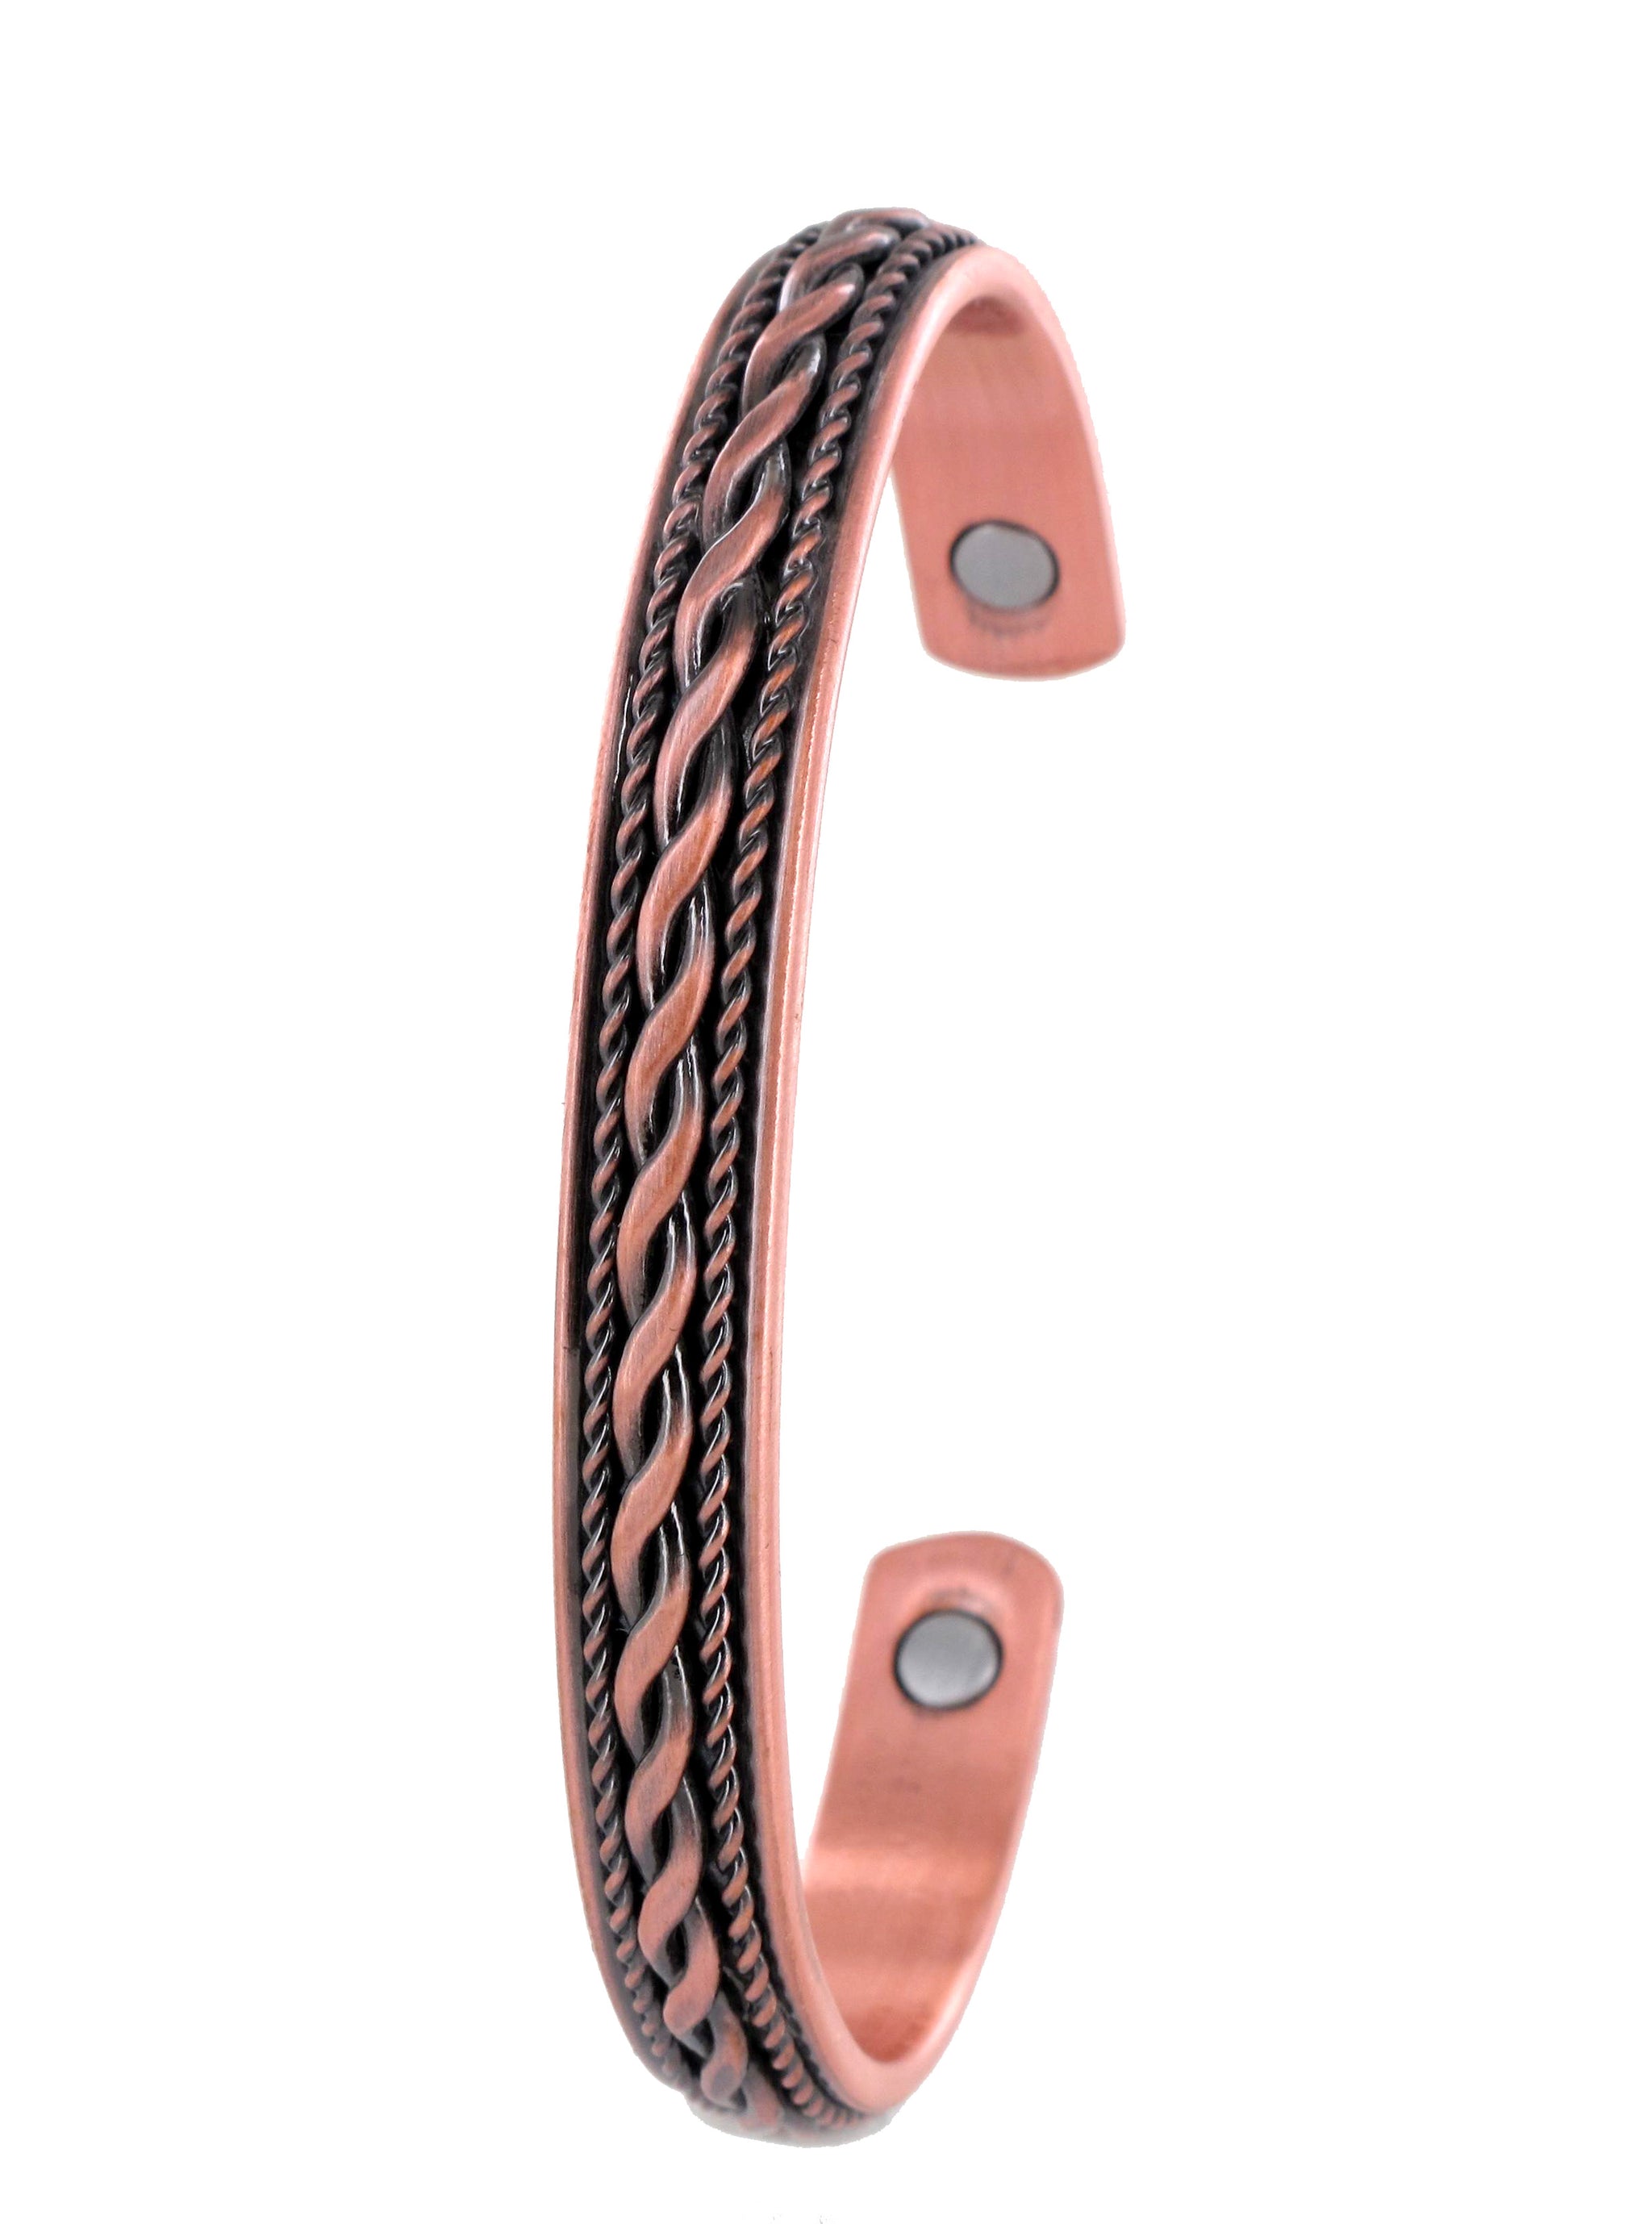 Copper Bracelet - Plaited Rope Twist